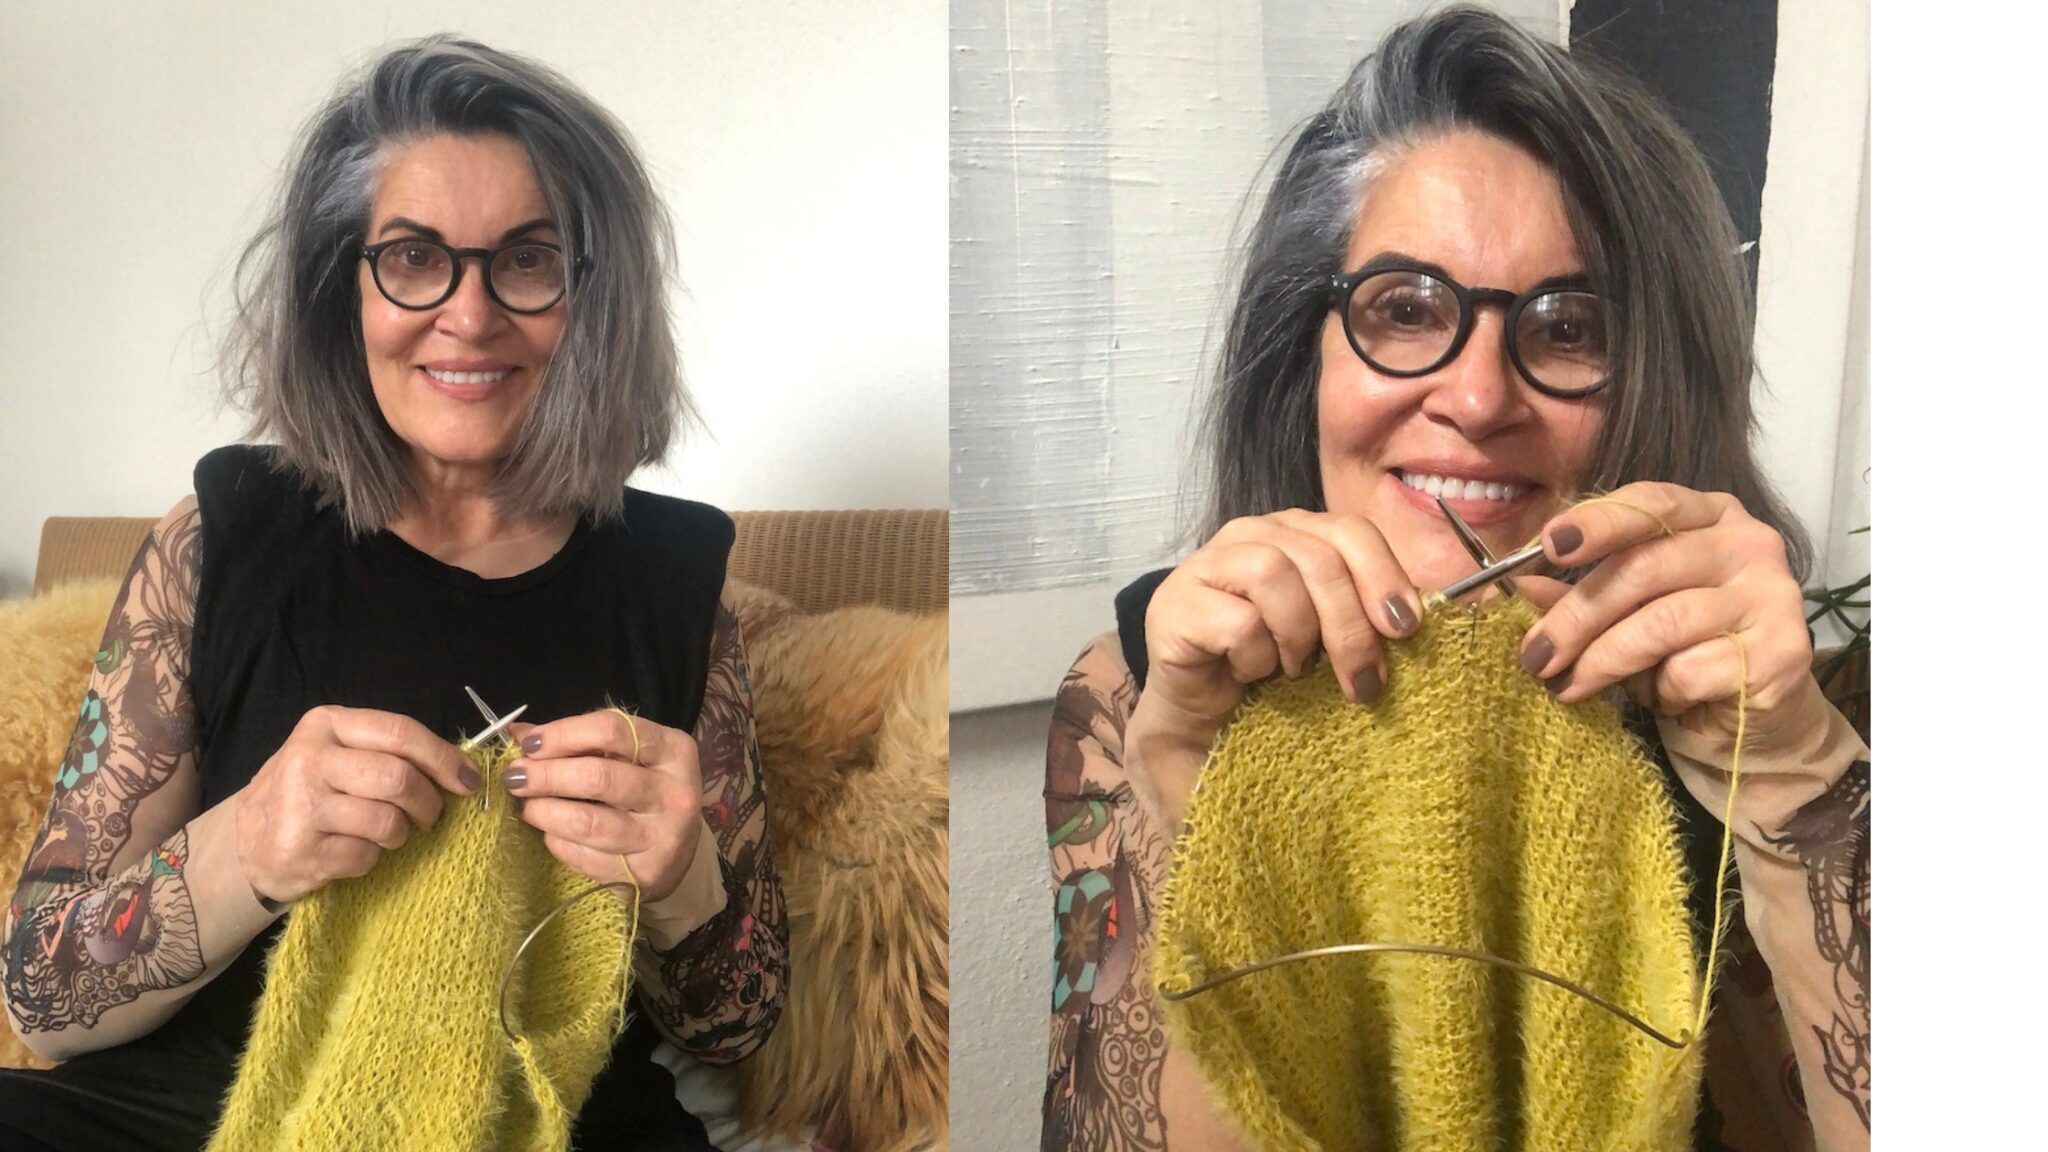 knitting-margit-ruediger-cultureandcream-blogpost